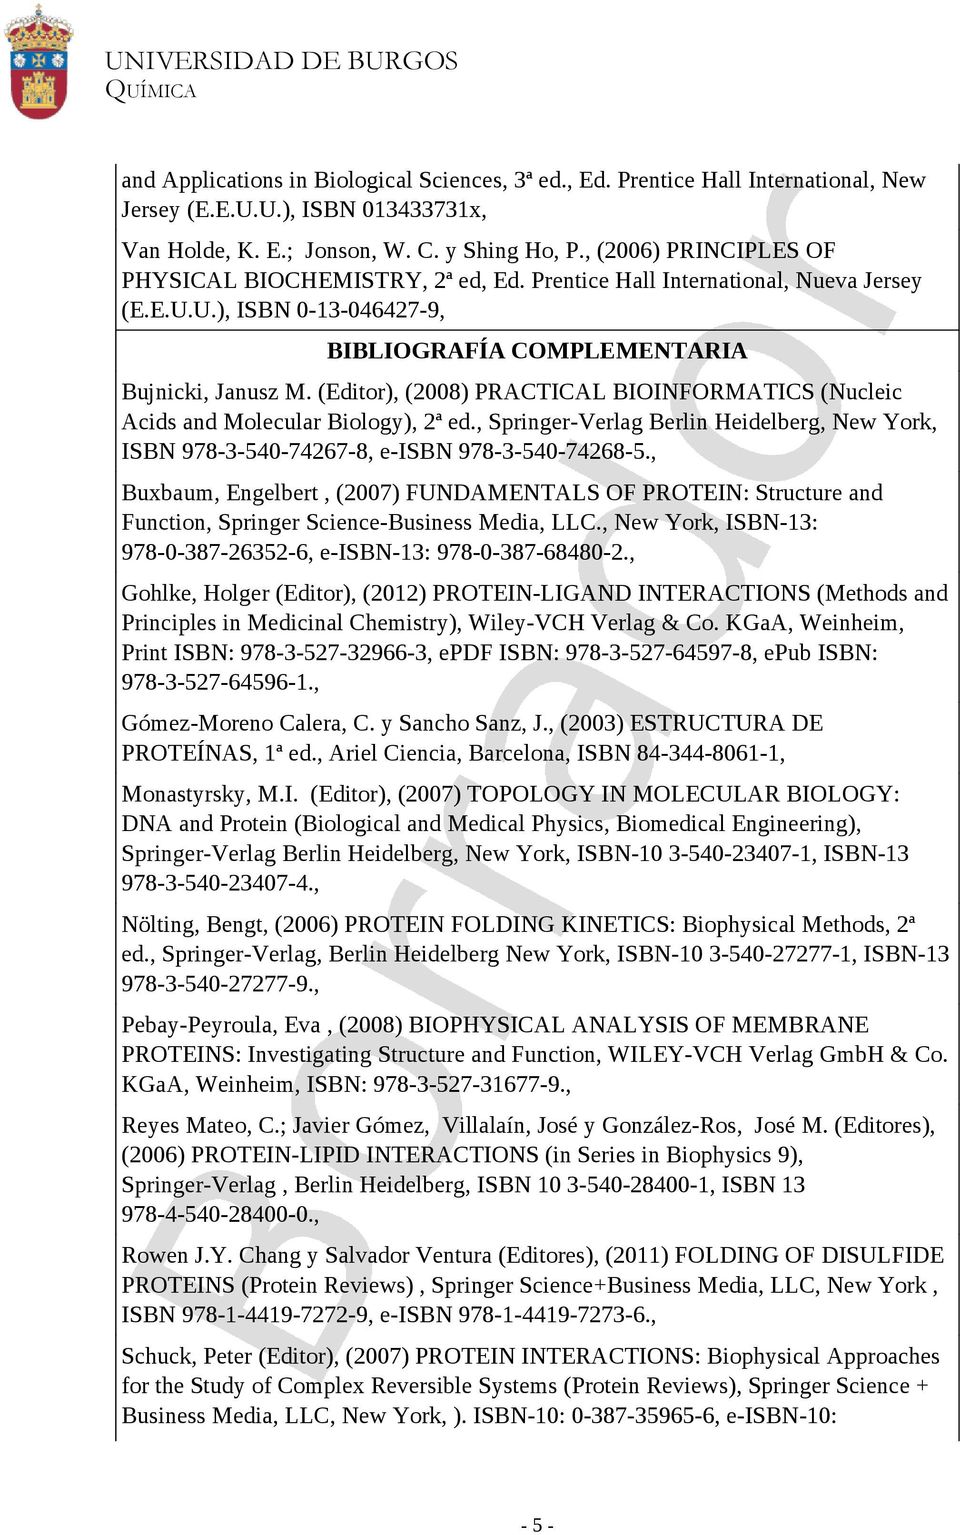 (Editor), (2008) PRACTICAL BIOINFORMATICS (Nucleic Acids and Molecular Biology), 2ª ed., Springer-Verlag Berlin Heidelberg, New York, ISBN 978-3-540-74267-8, e-isbn 978-3-540-74268-5.